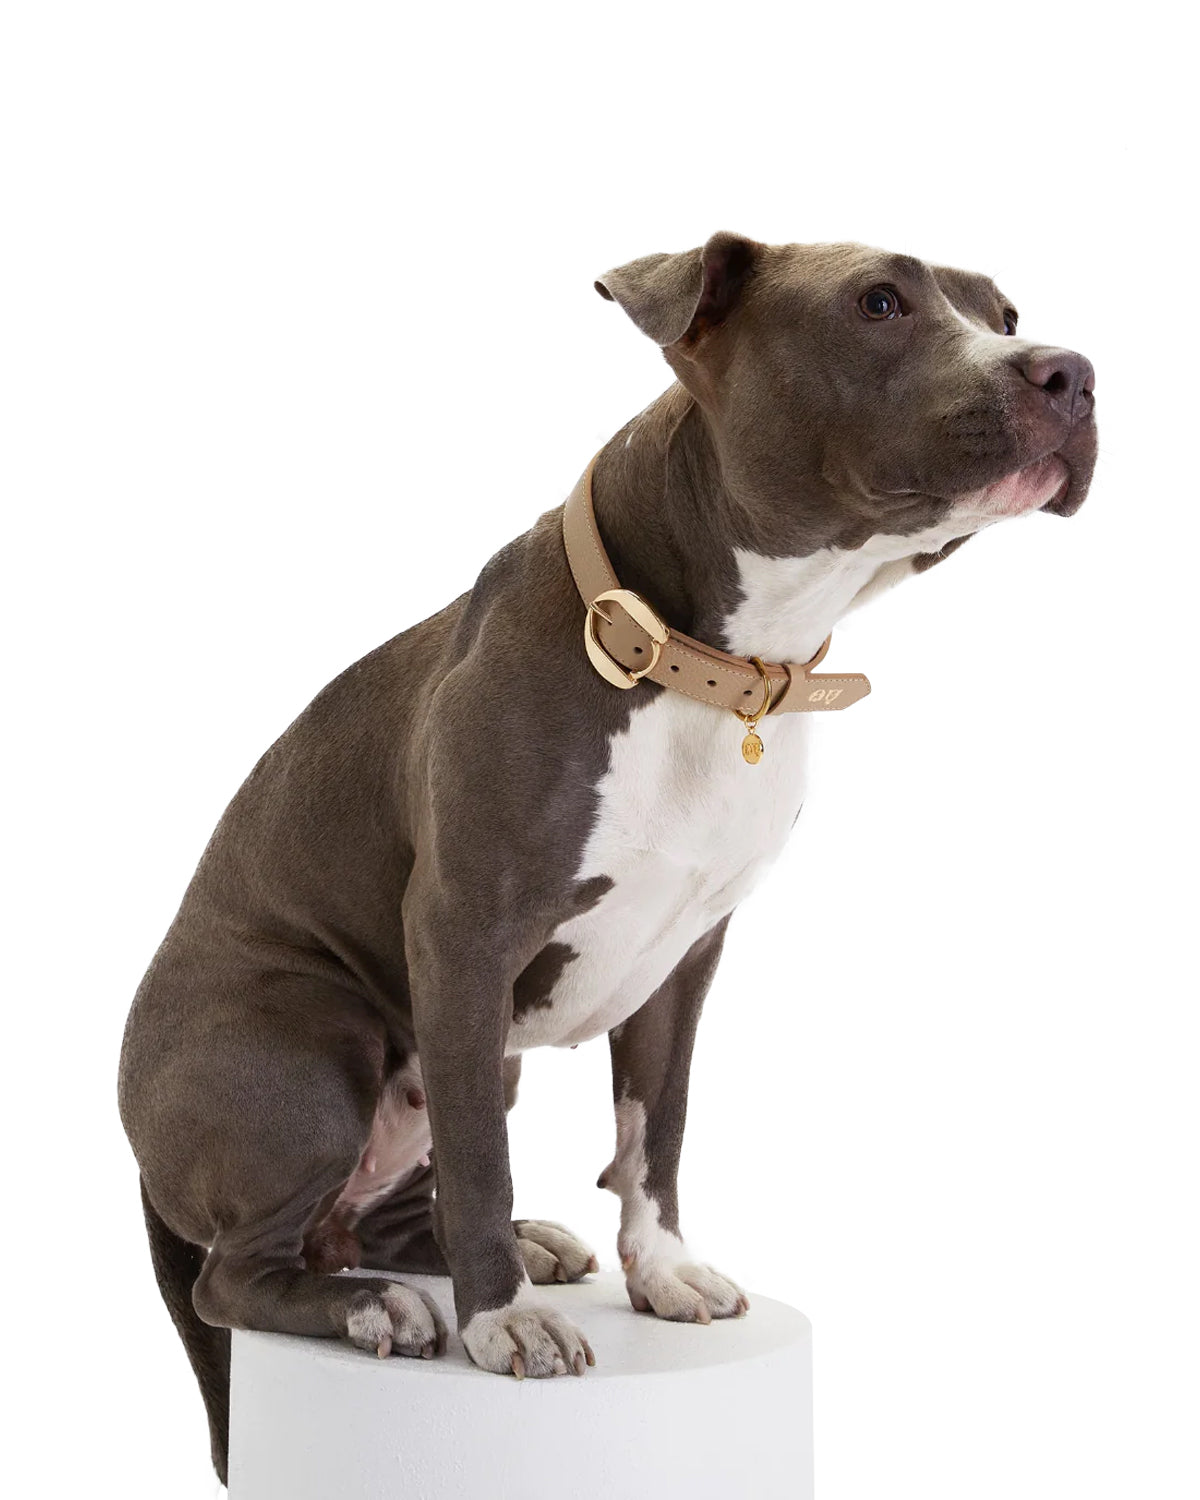 Hachiko Dog Collar